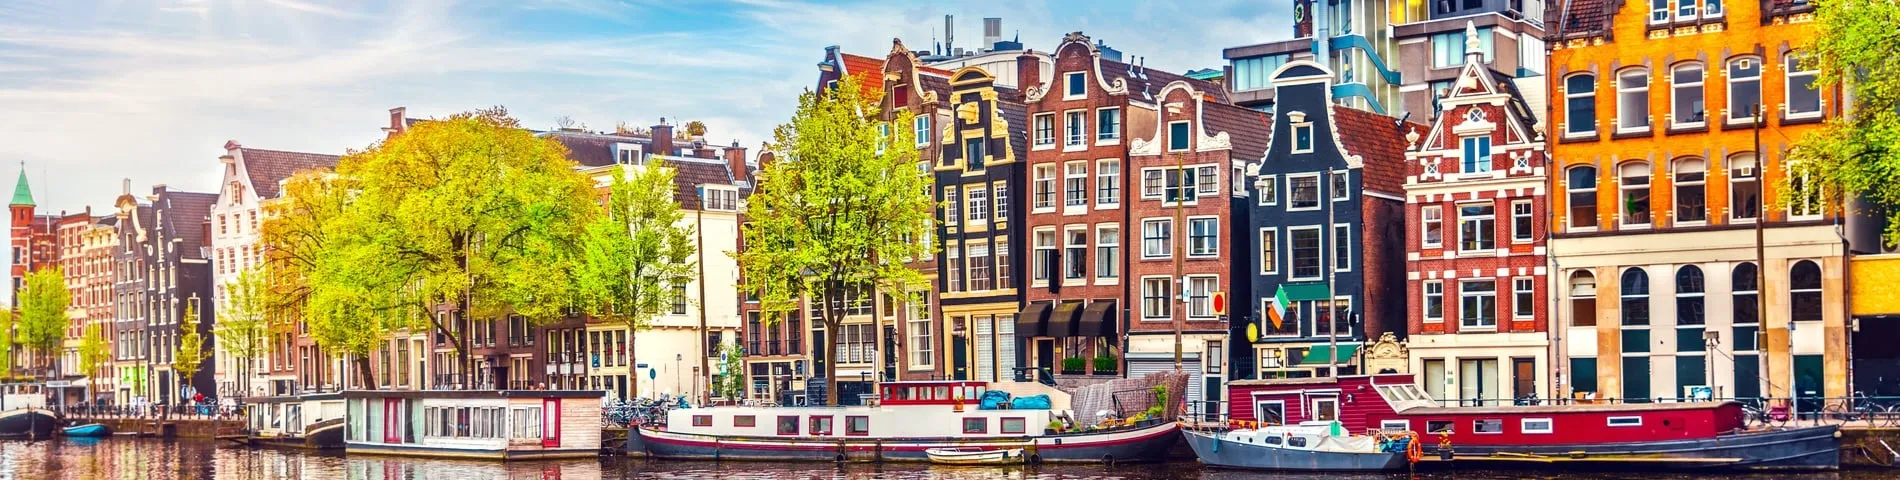 Amszterdam - 